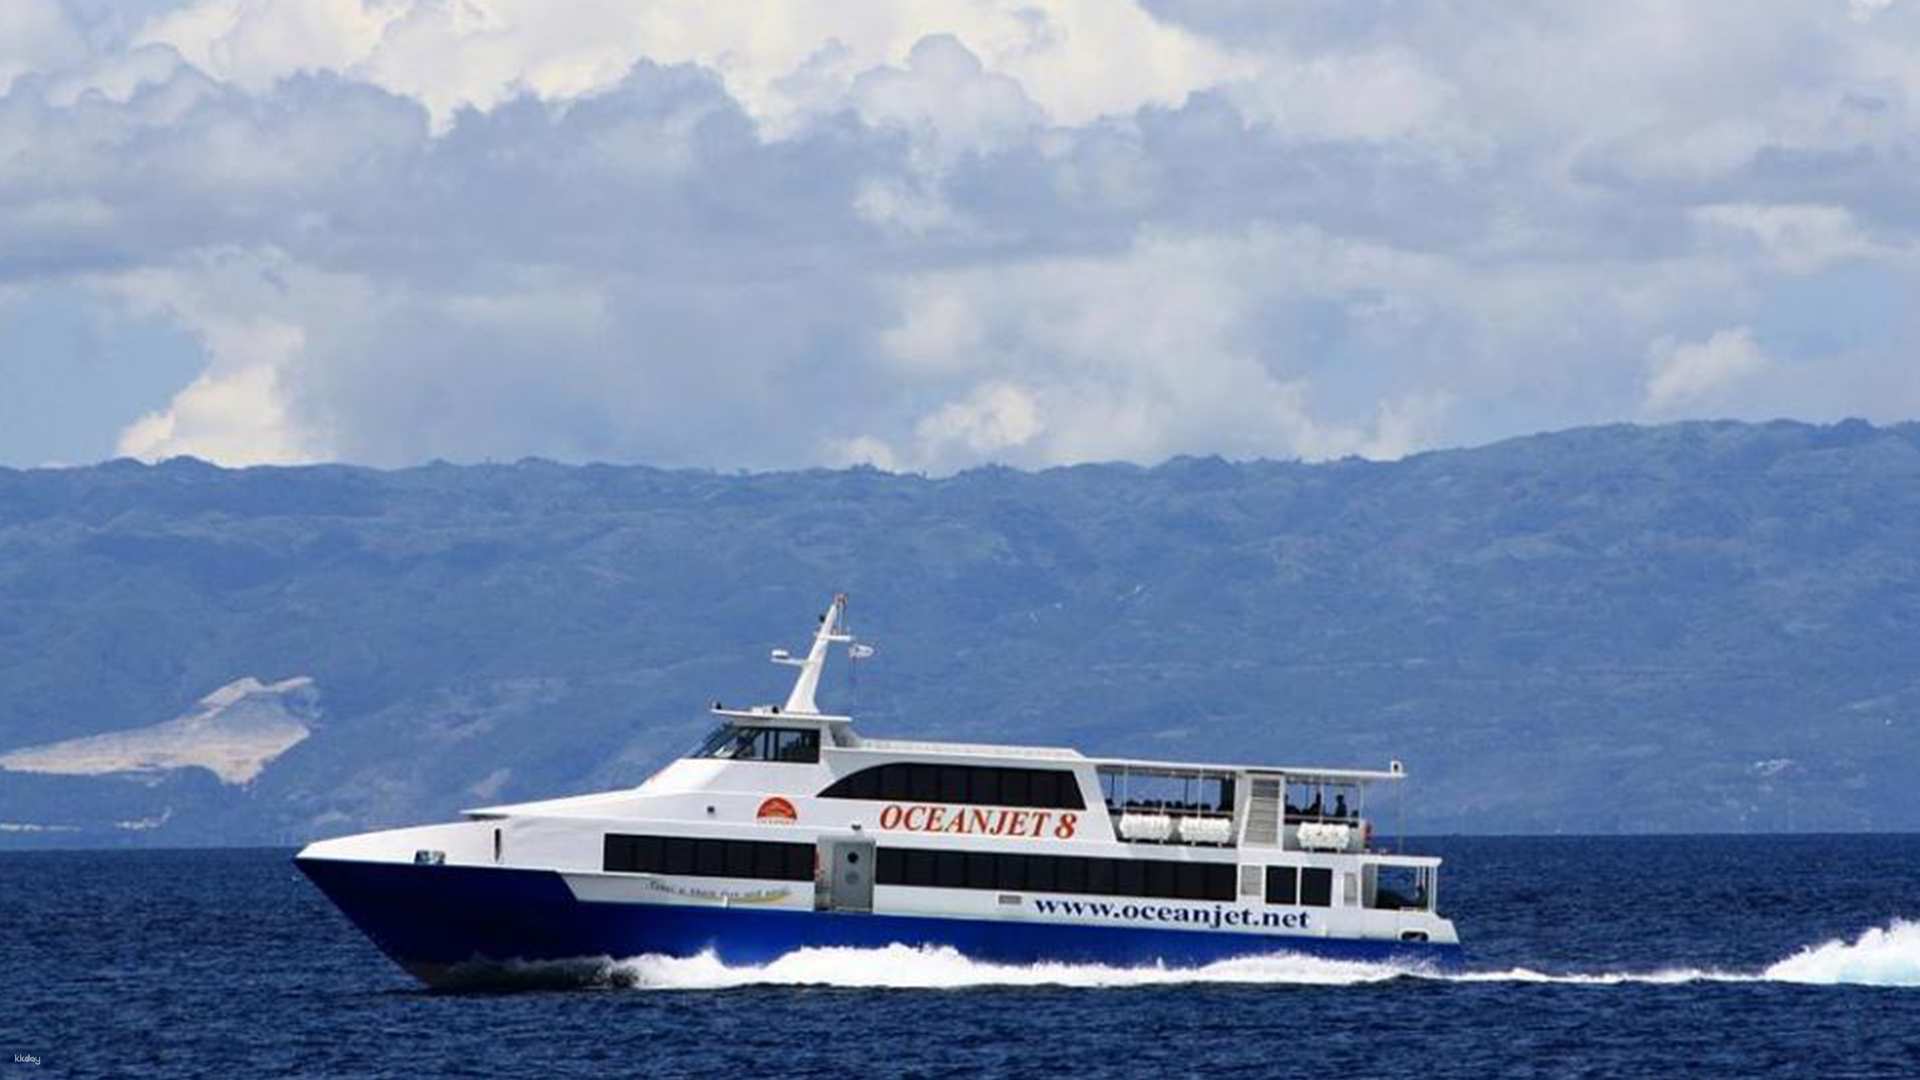 High Speed Ferry Tickets Between Cebu And Tagbilaran Bohol Aboard Oceanjet Philippines Miki 